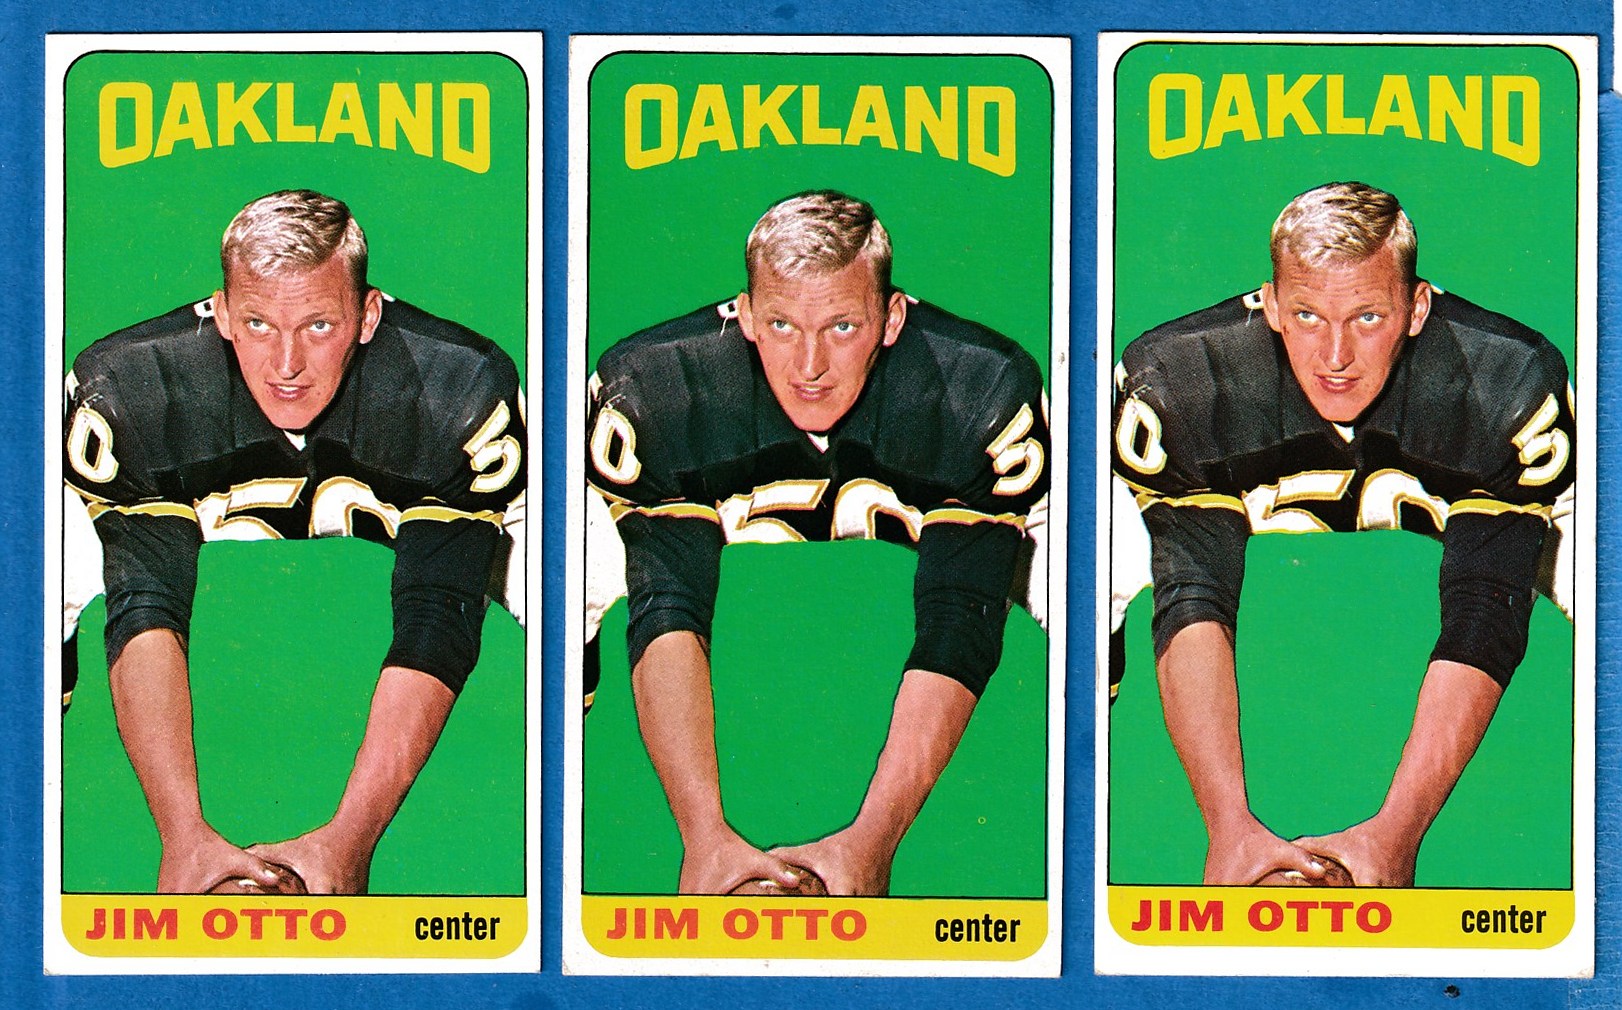 1965 Topps FB #145 Jim Otto [#] (Oakland Raiders) Football cards value